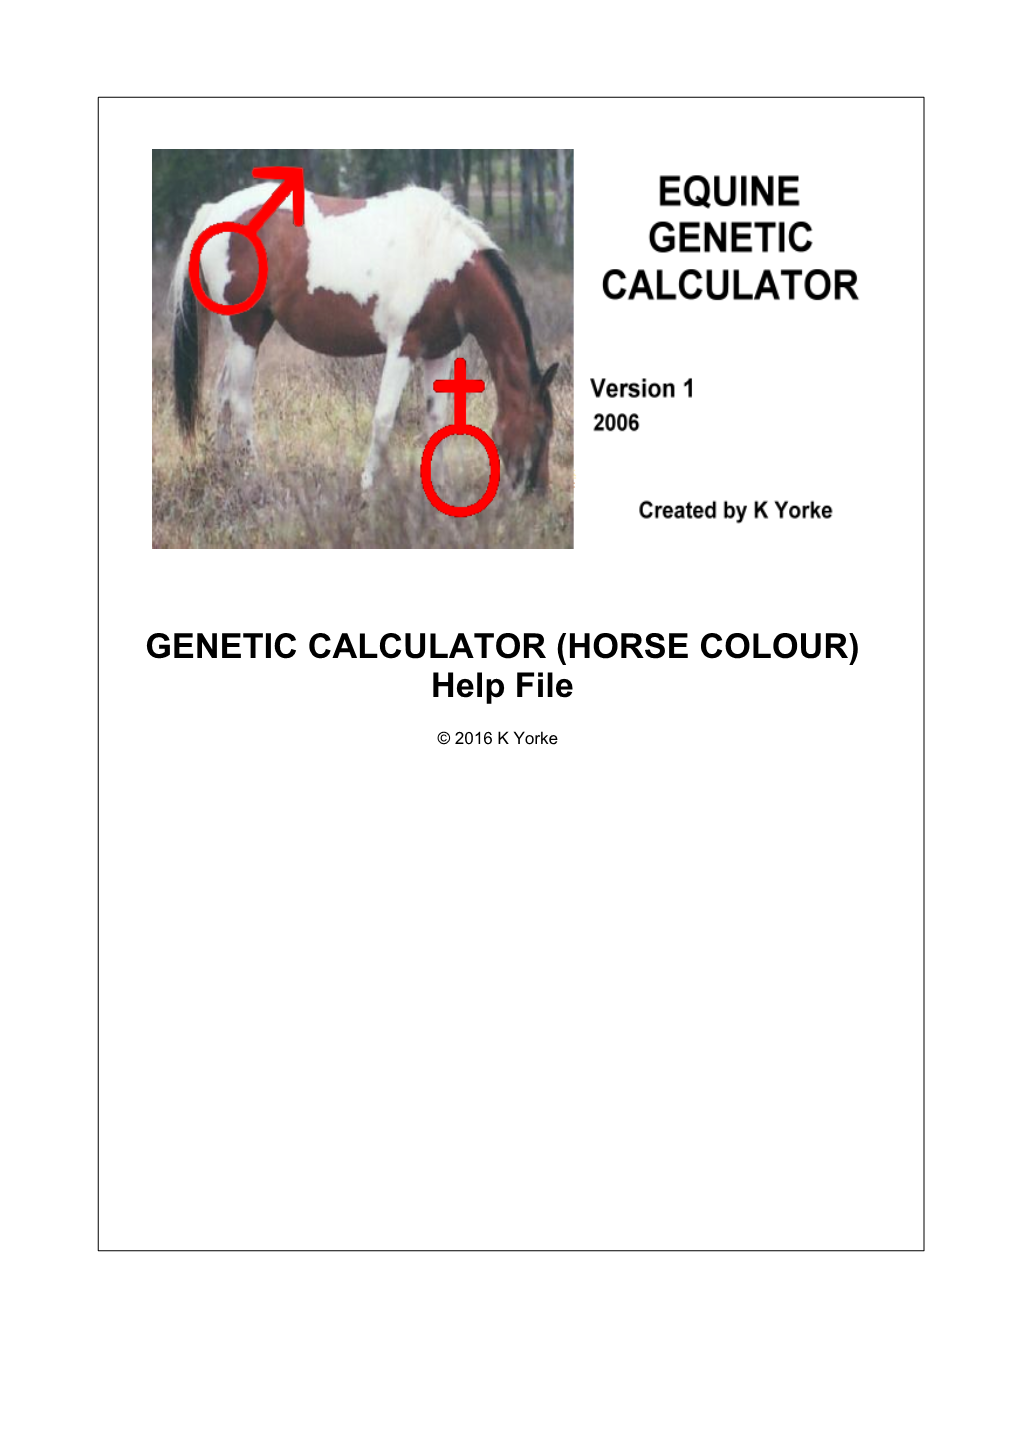 GENETIC CALCULATOR (HORSE COLOUR) Help File